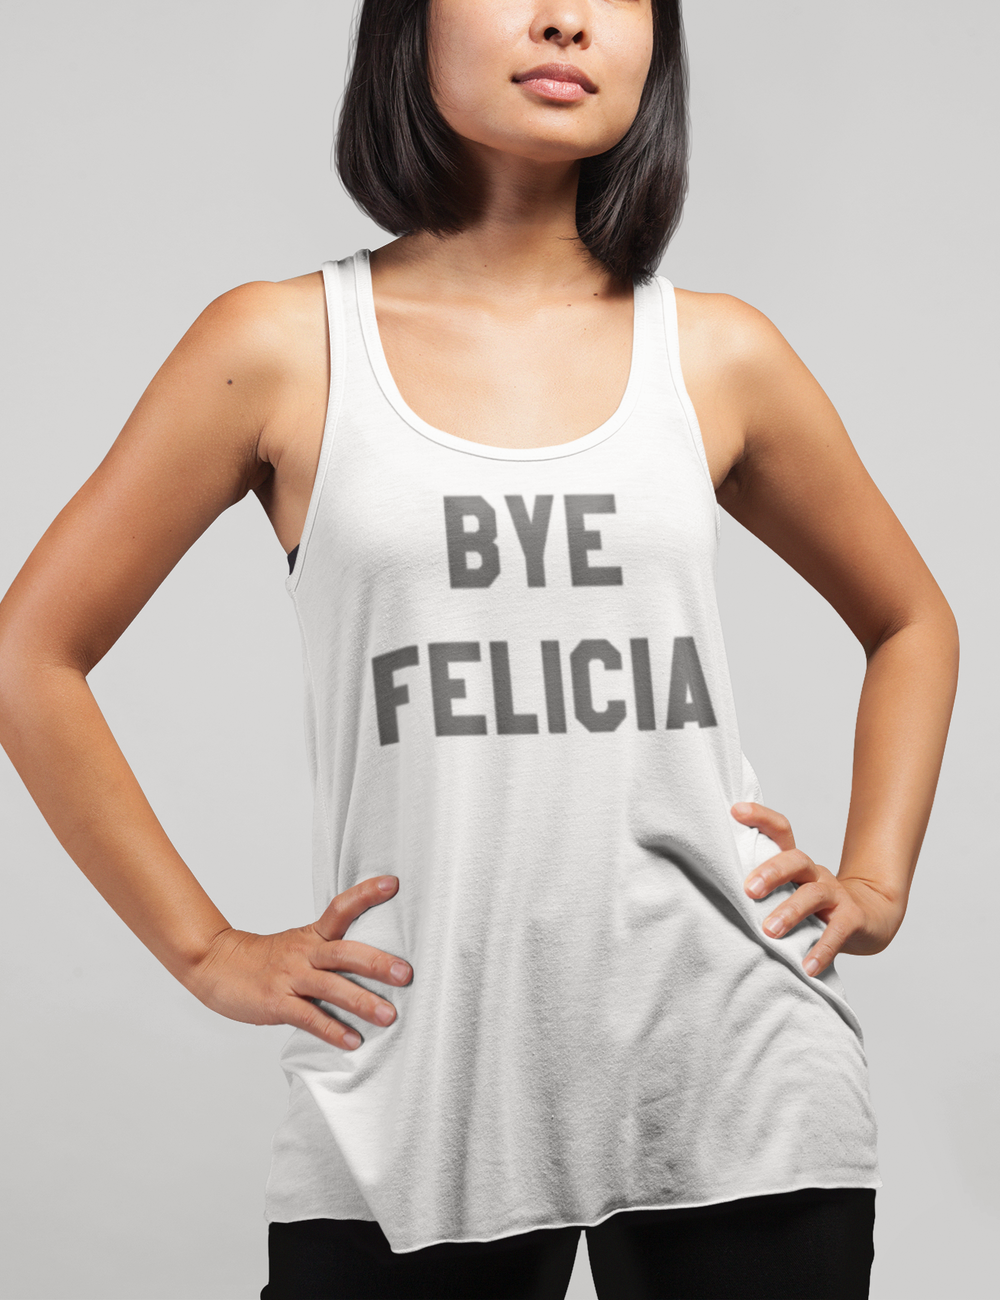 Bye Felicia | Women's Cut Racerback Tank Top OniTakai